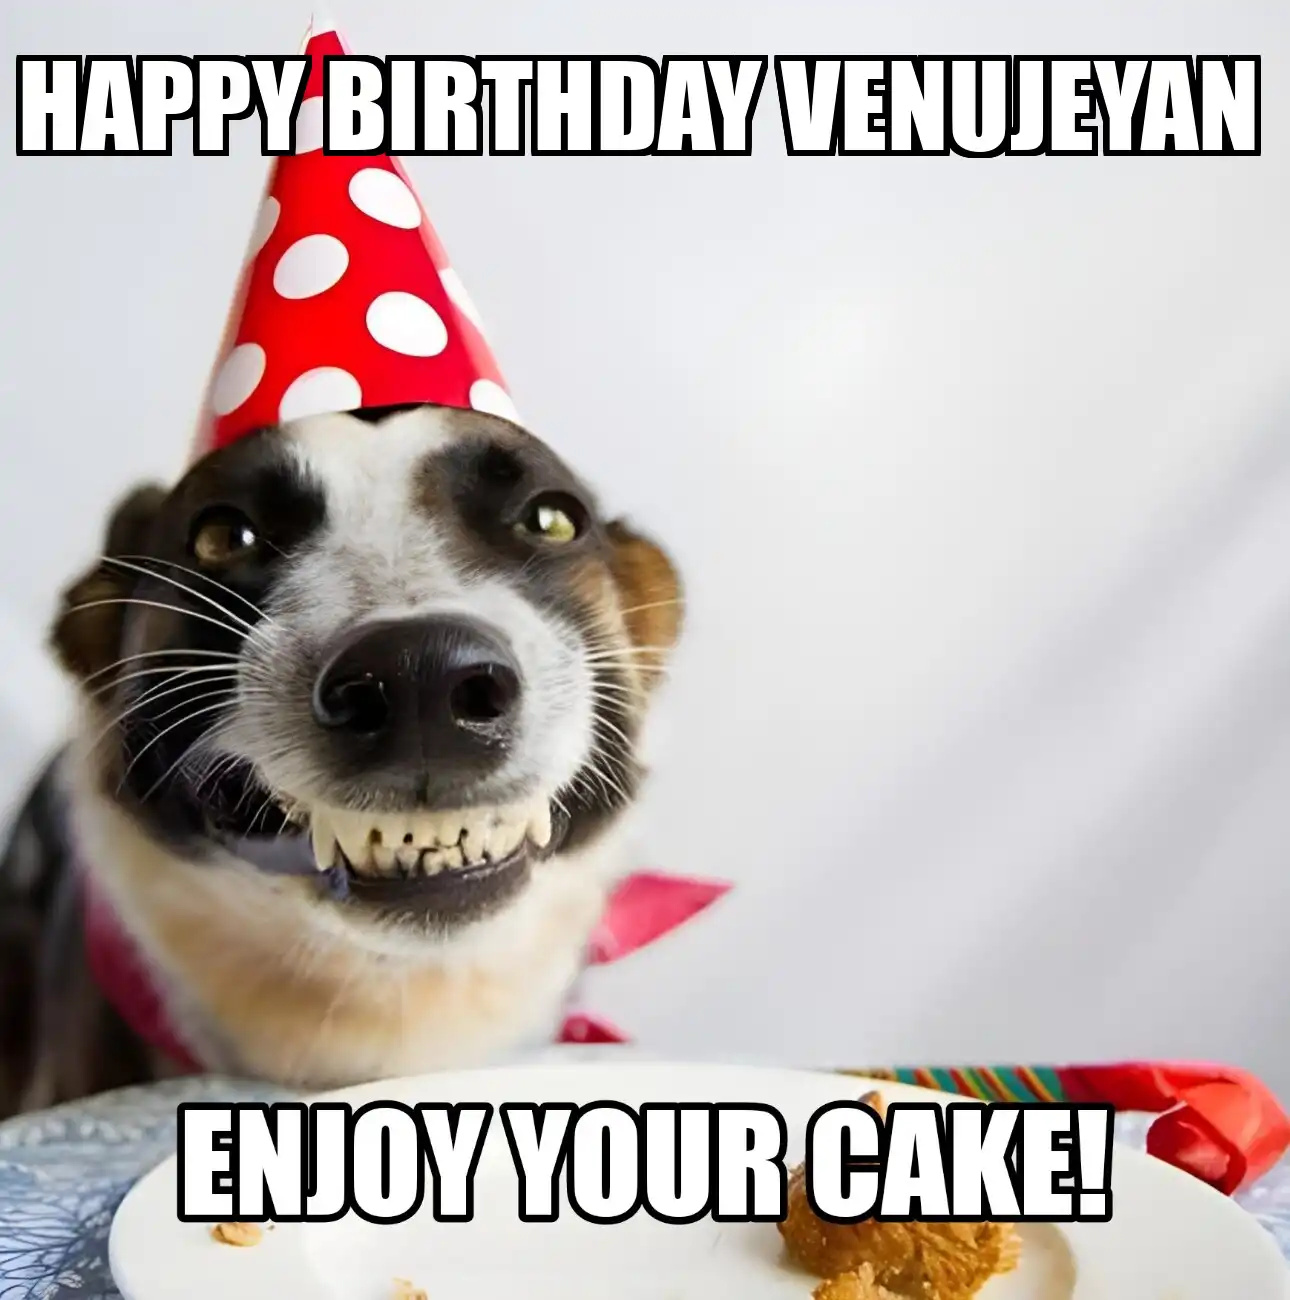 Happy Birthday Venujeyan Enjoy Your Cake Dog Meme